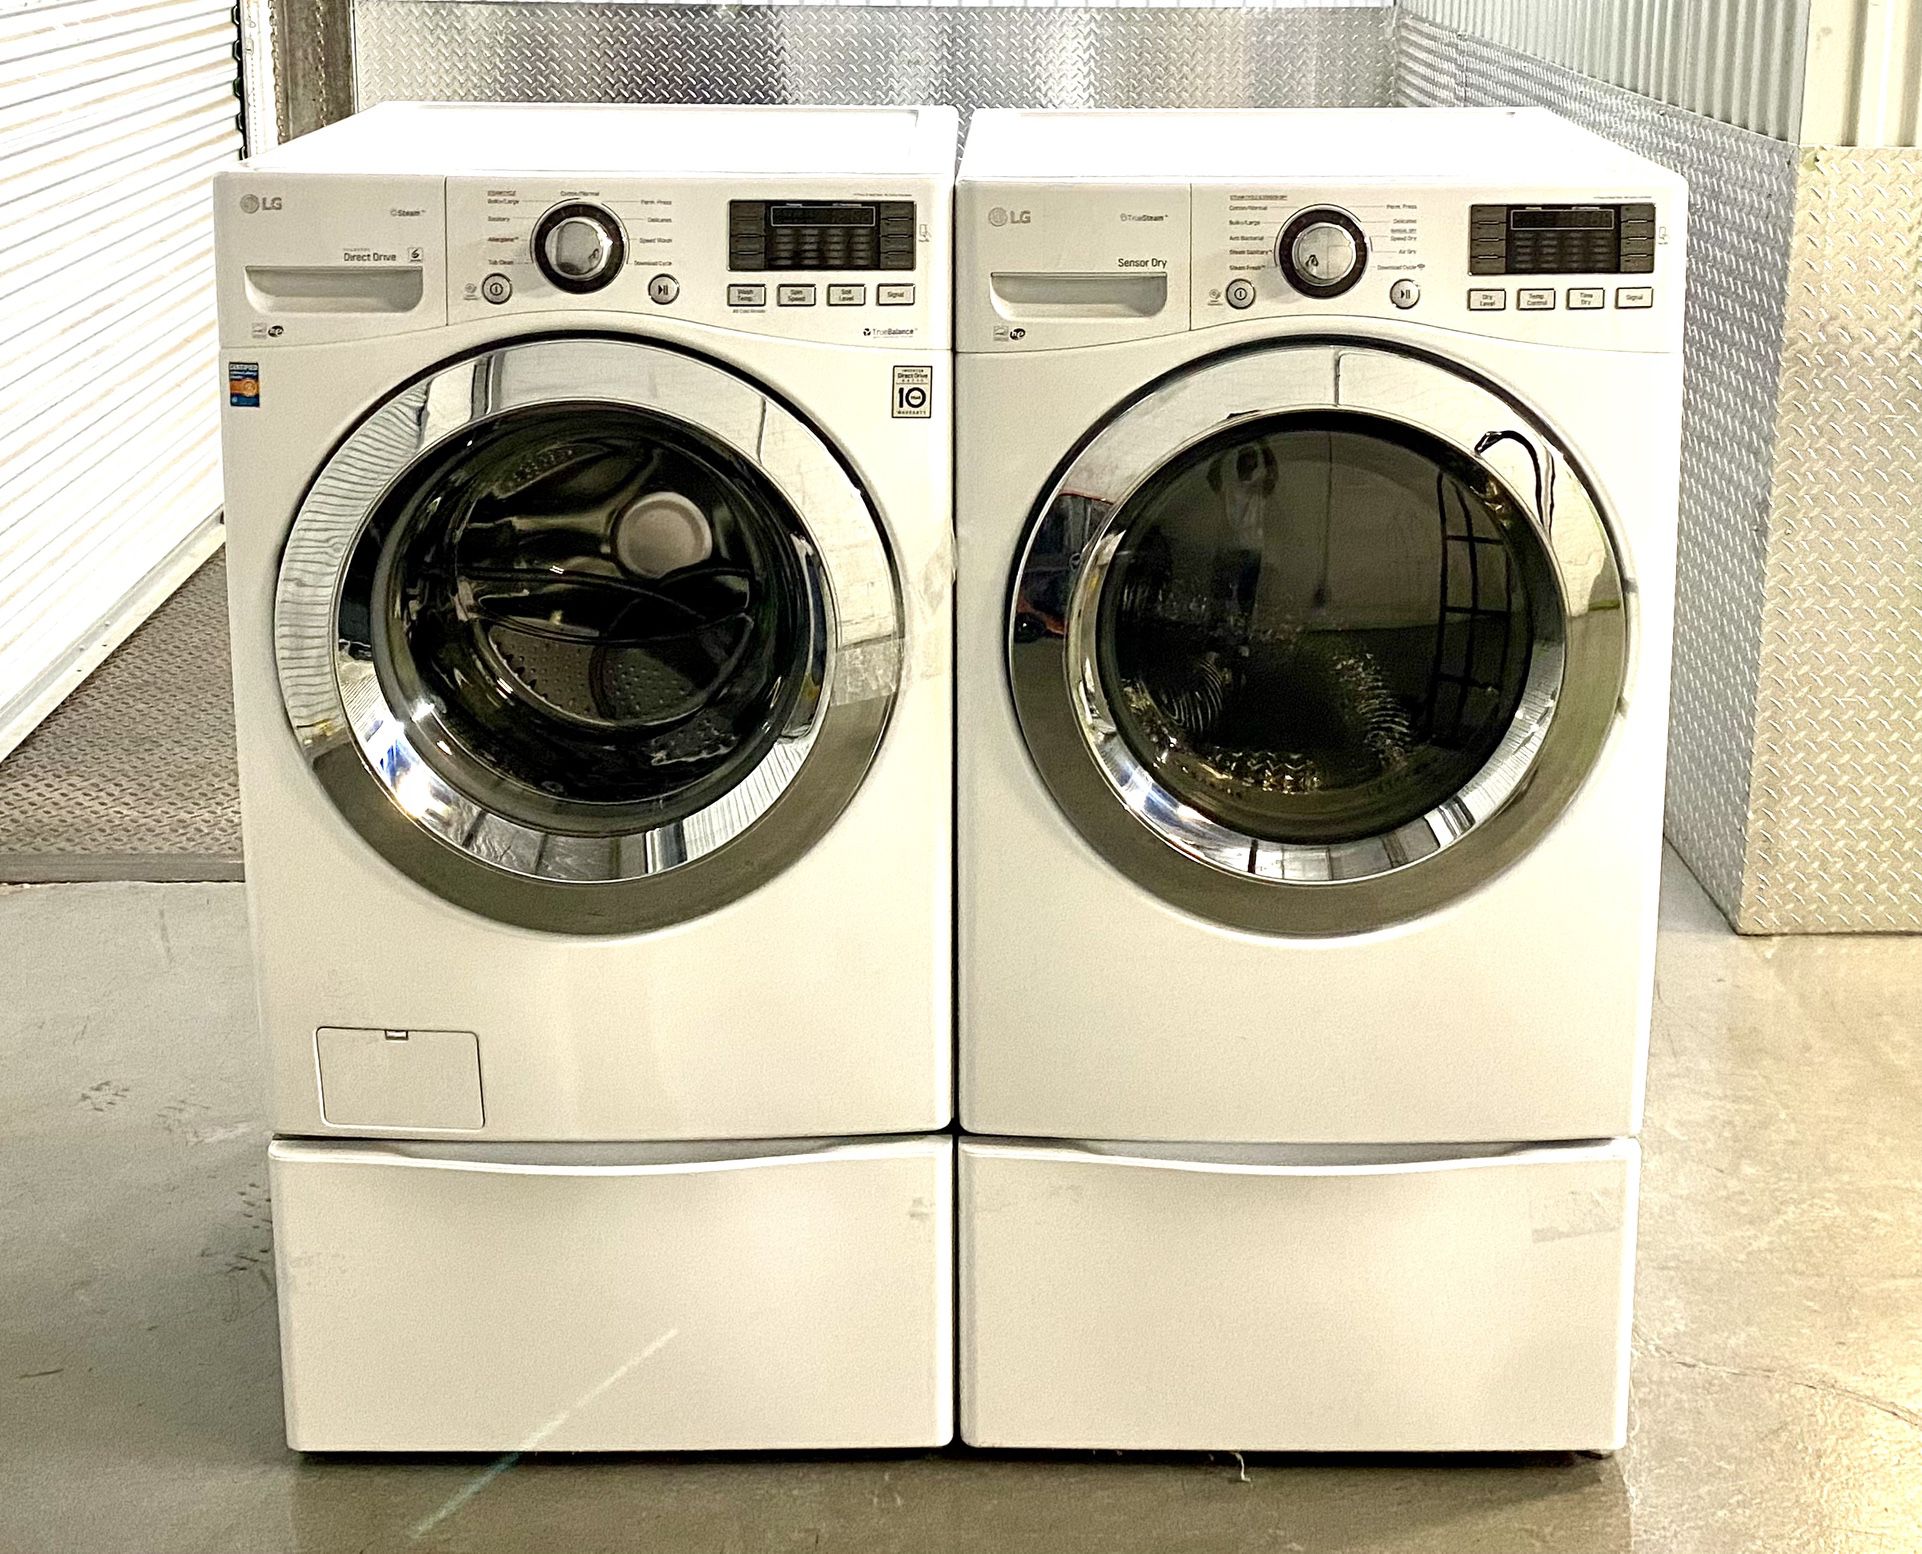 PRACTICALLY NEW CONDITION!!! LG “STEAM” ULTRA CAPACITY Washer & Dryer w Pedestals!